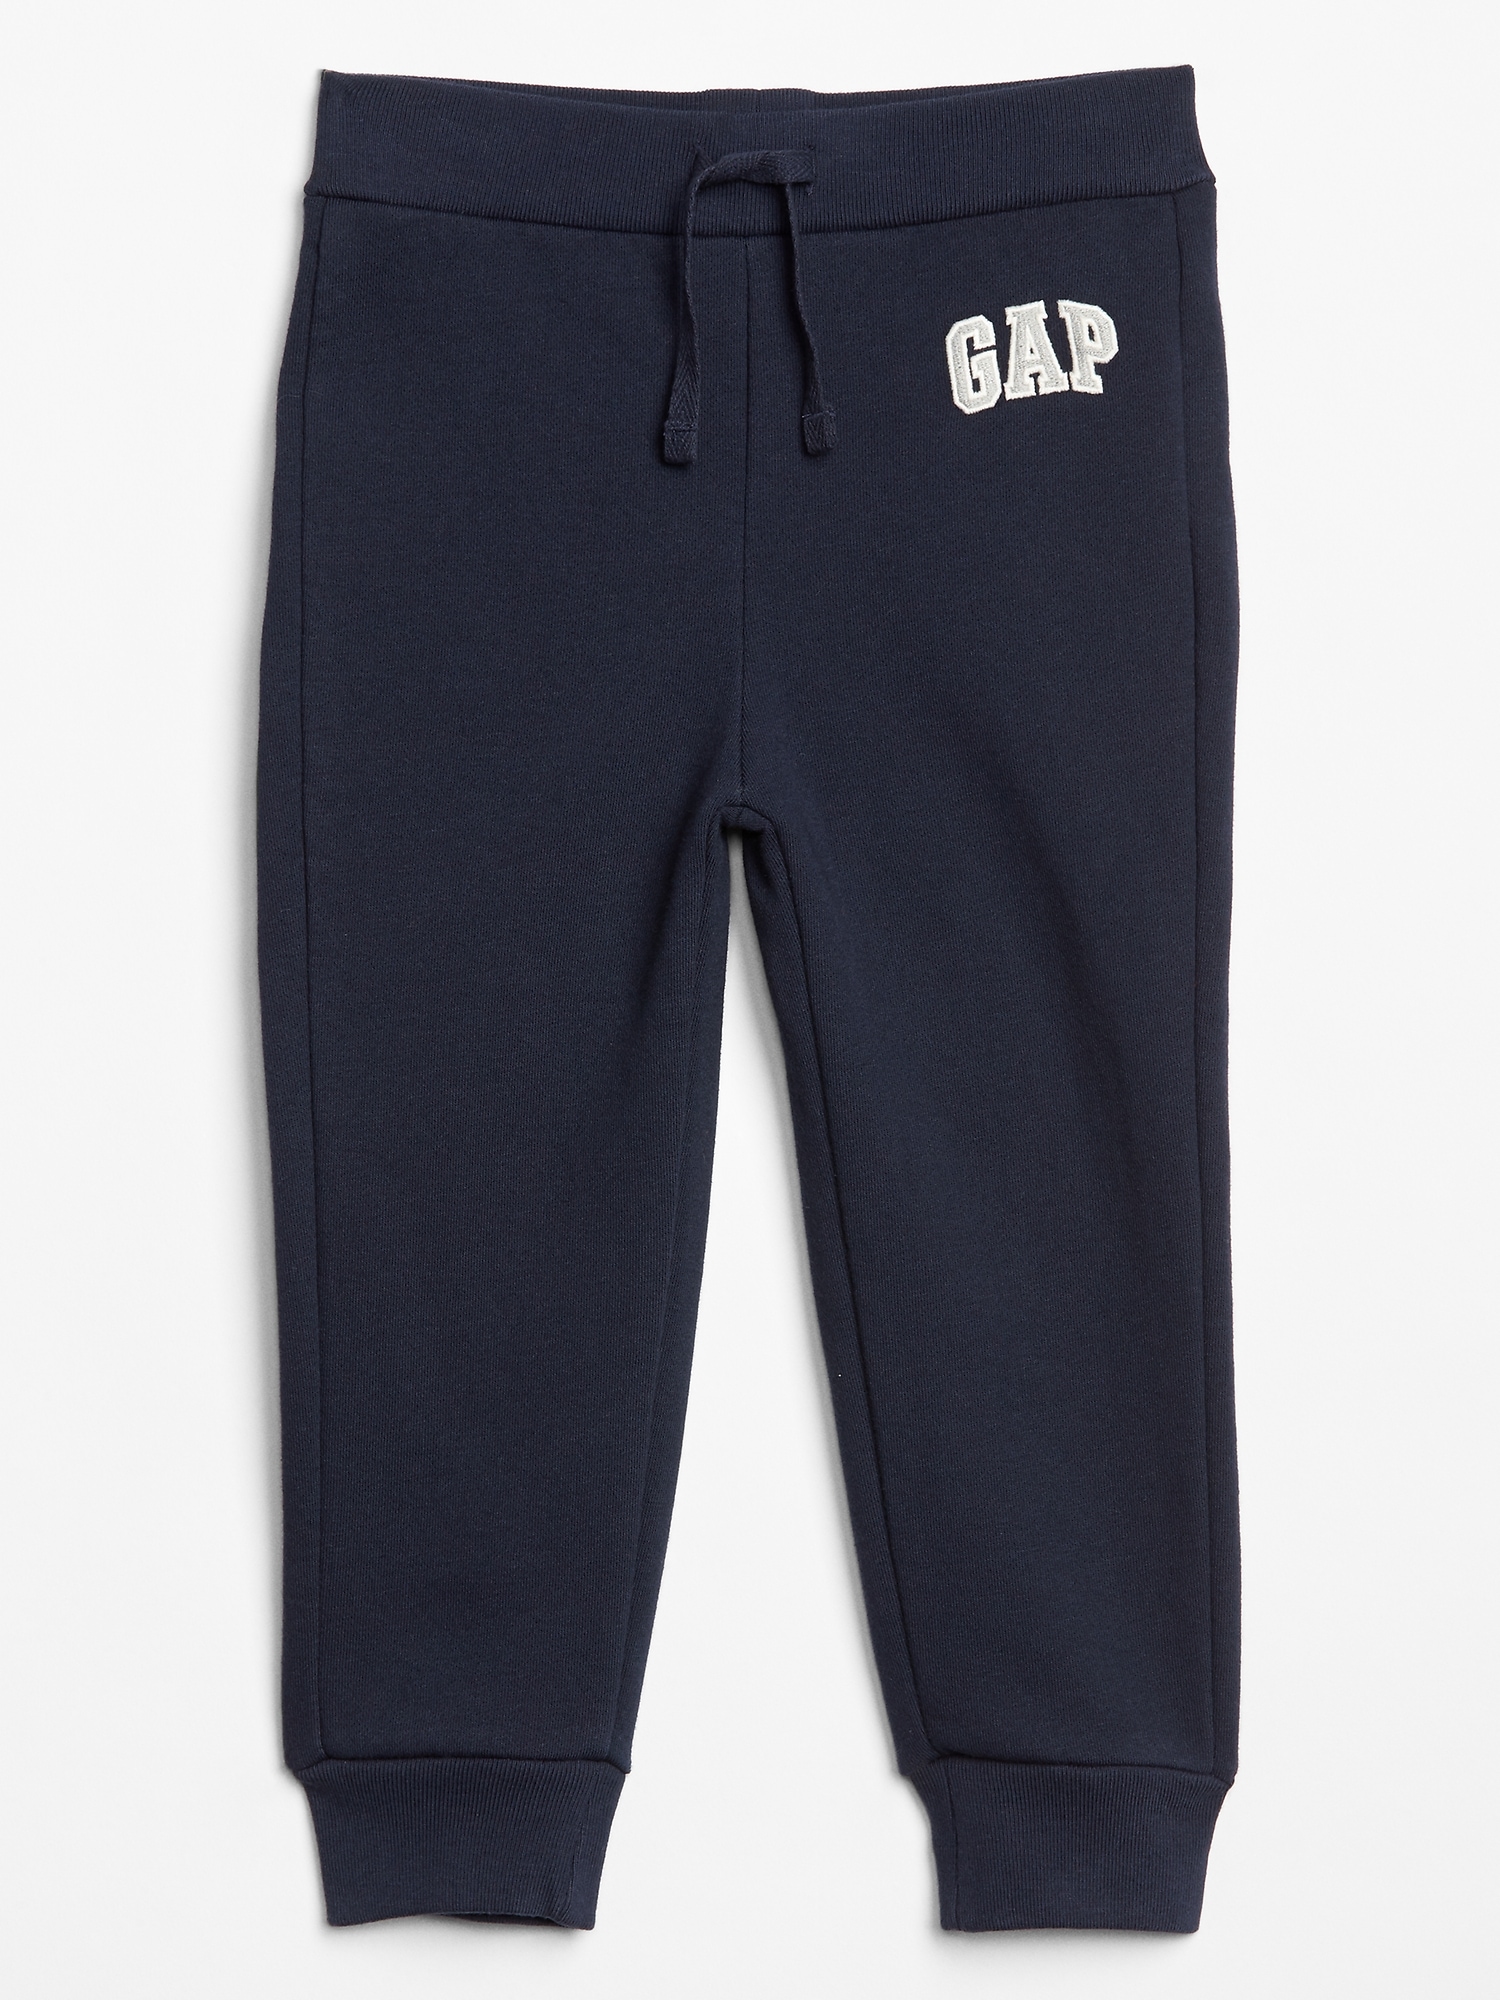 babyGap Logo Pull-On Joggers | Gap Factory